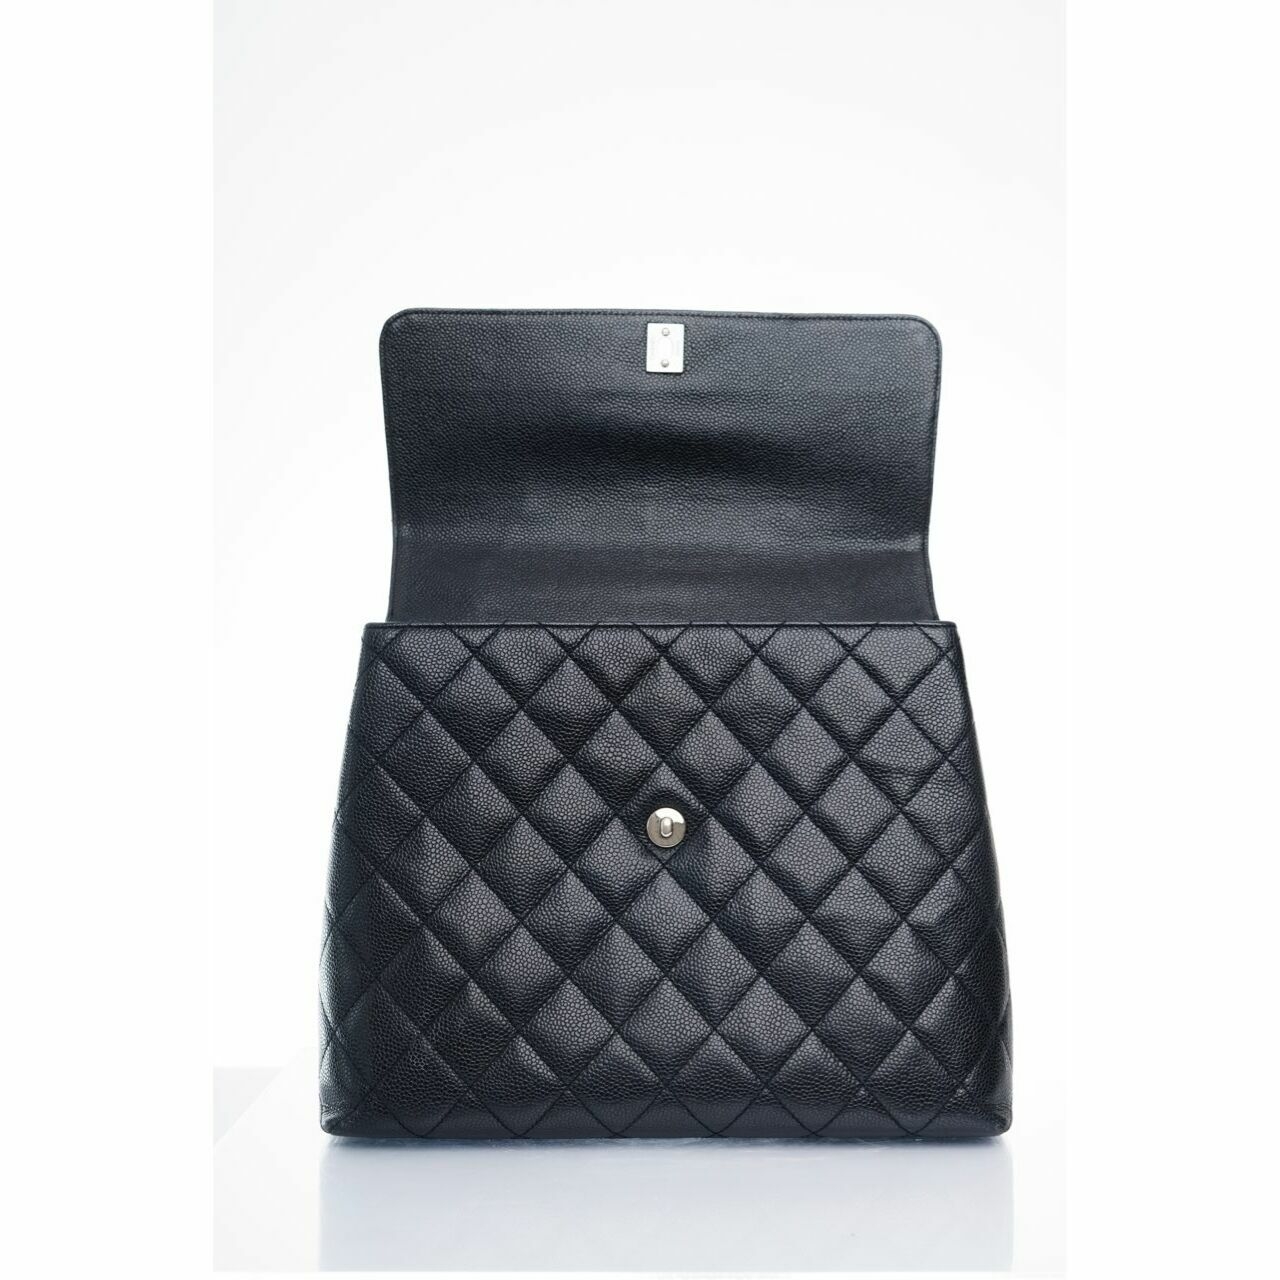 Chanel Metalasse Black Caviar Leather Top Handle Bag #6